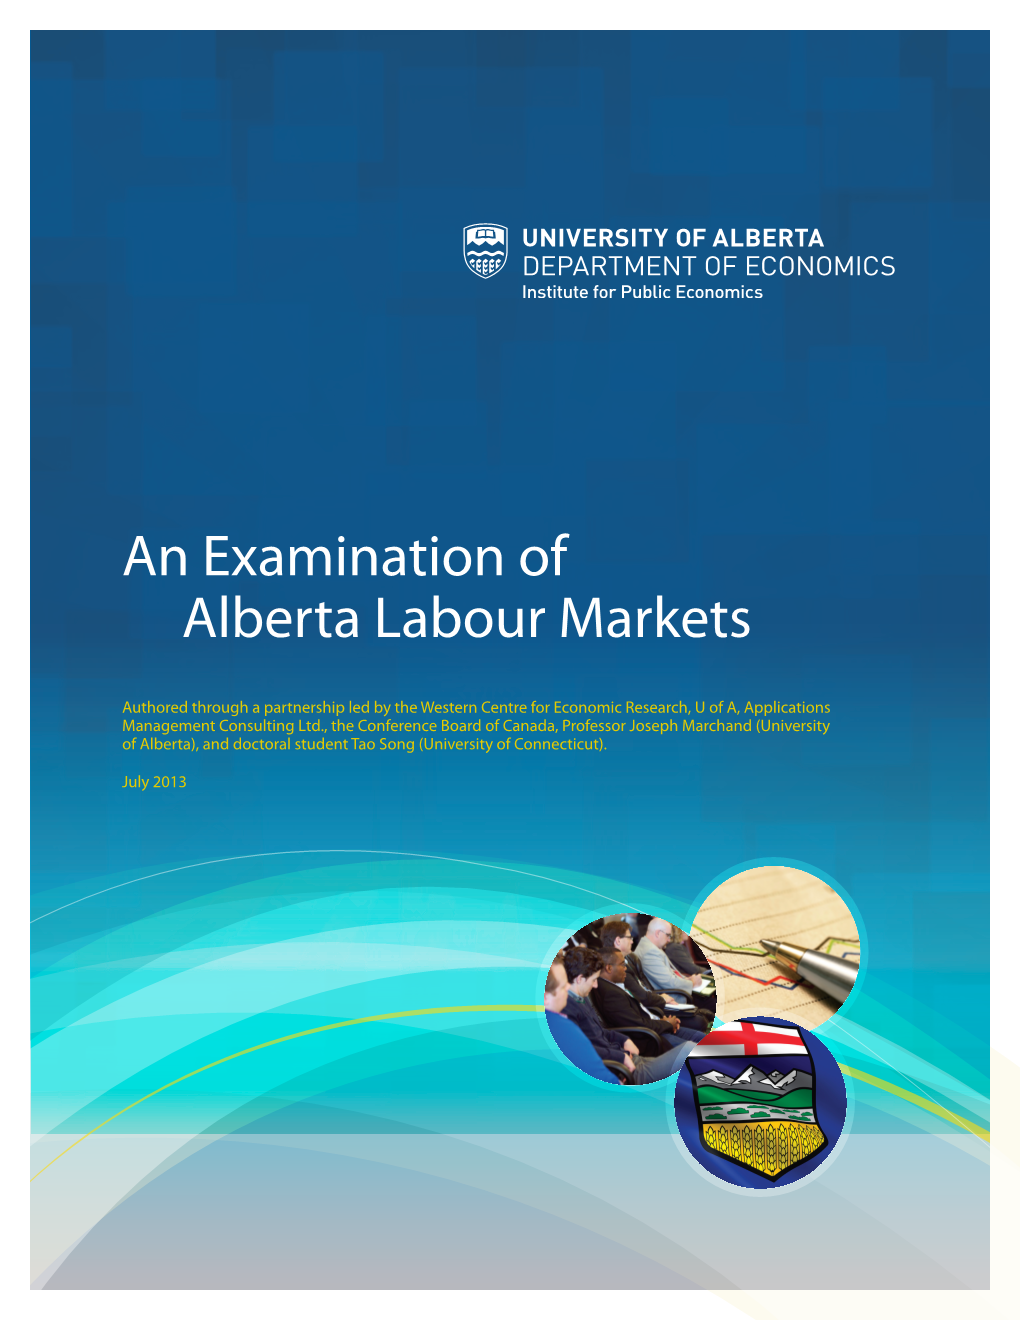 An Examination of Alberta Labour Markets